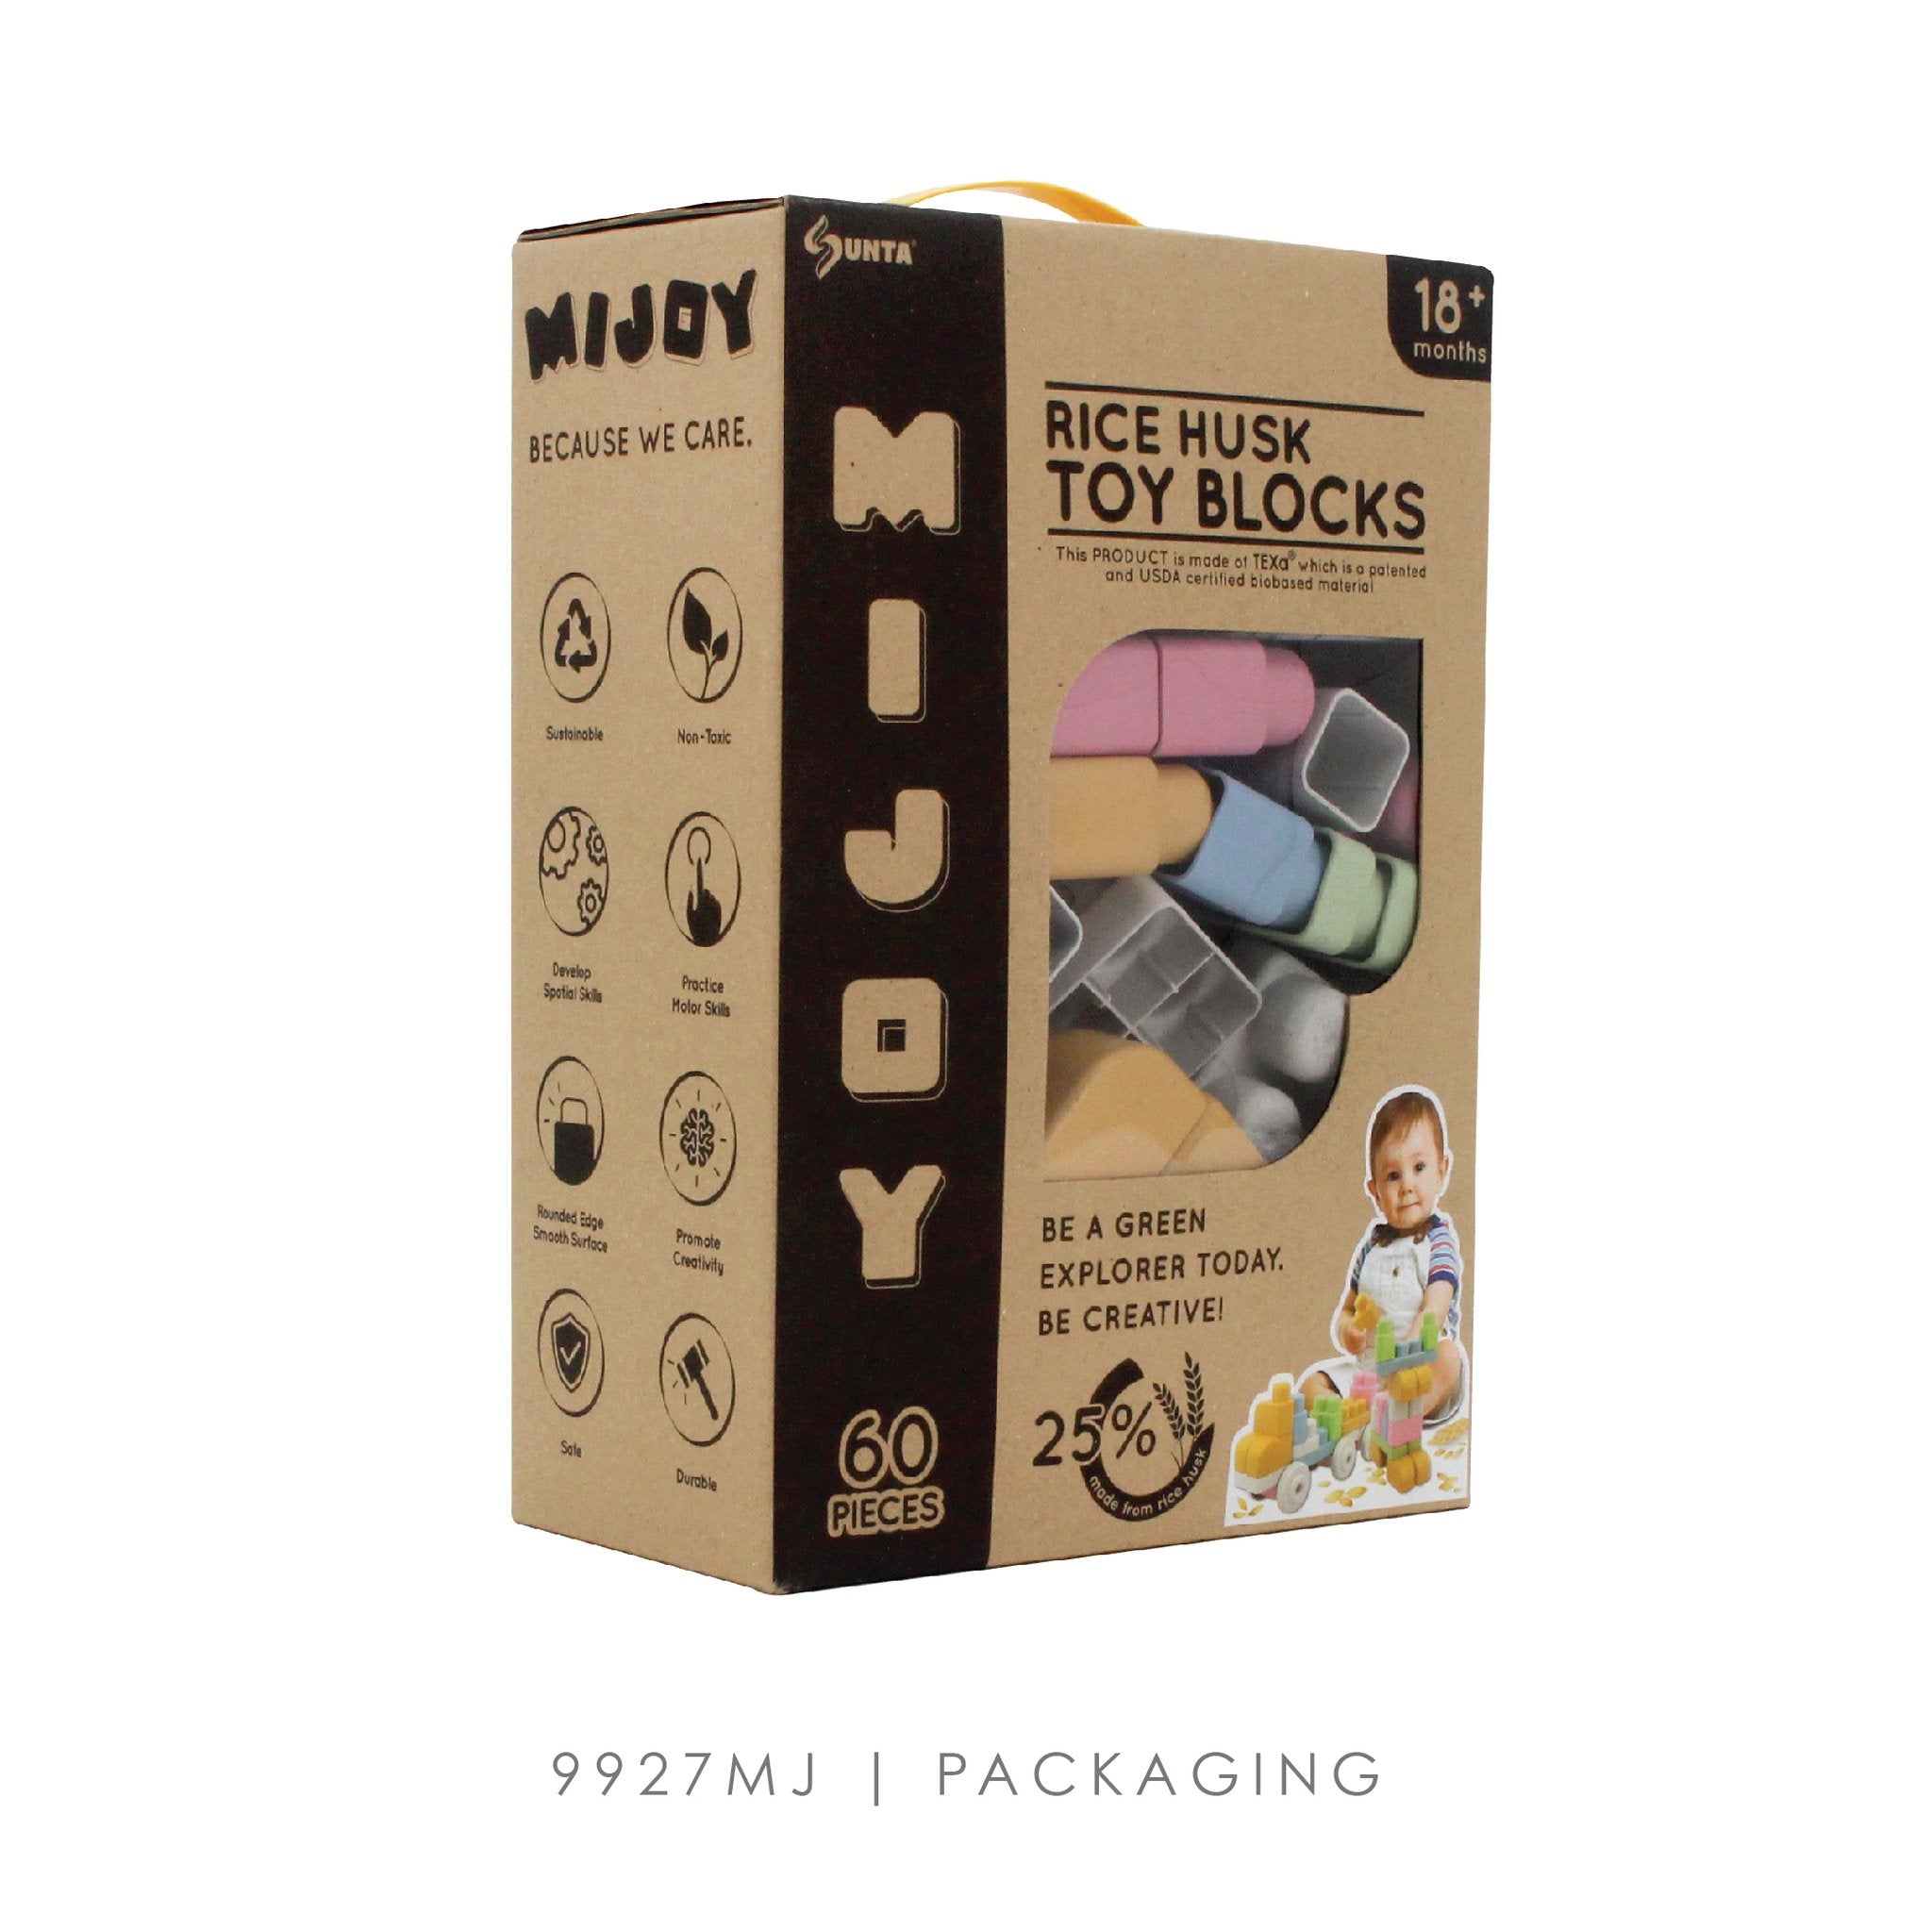 MIJOY Rice Husk Toy Blocks [60 pcs]